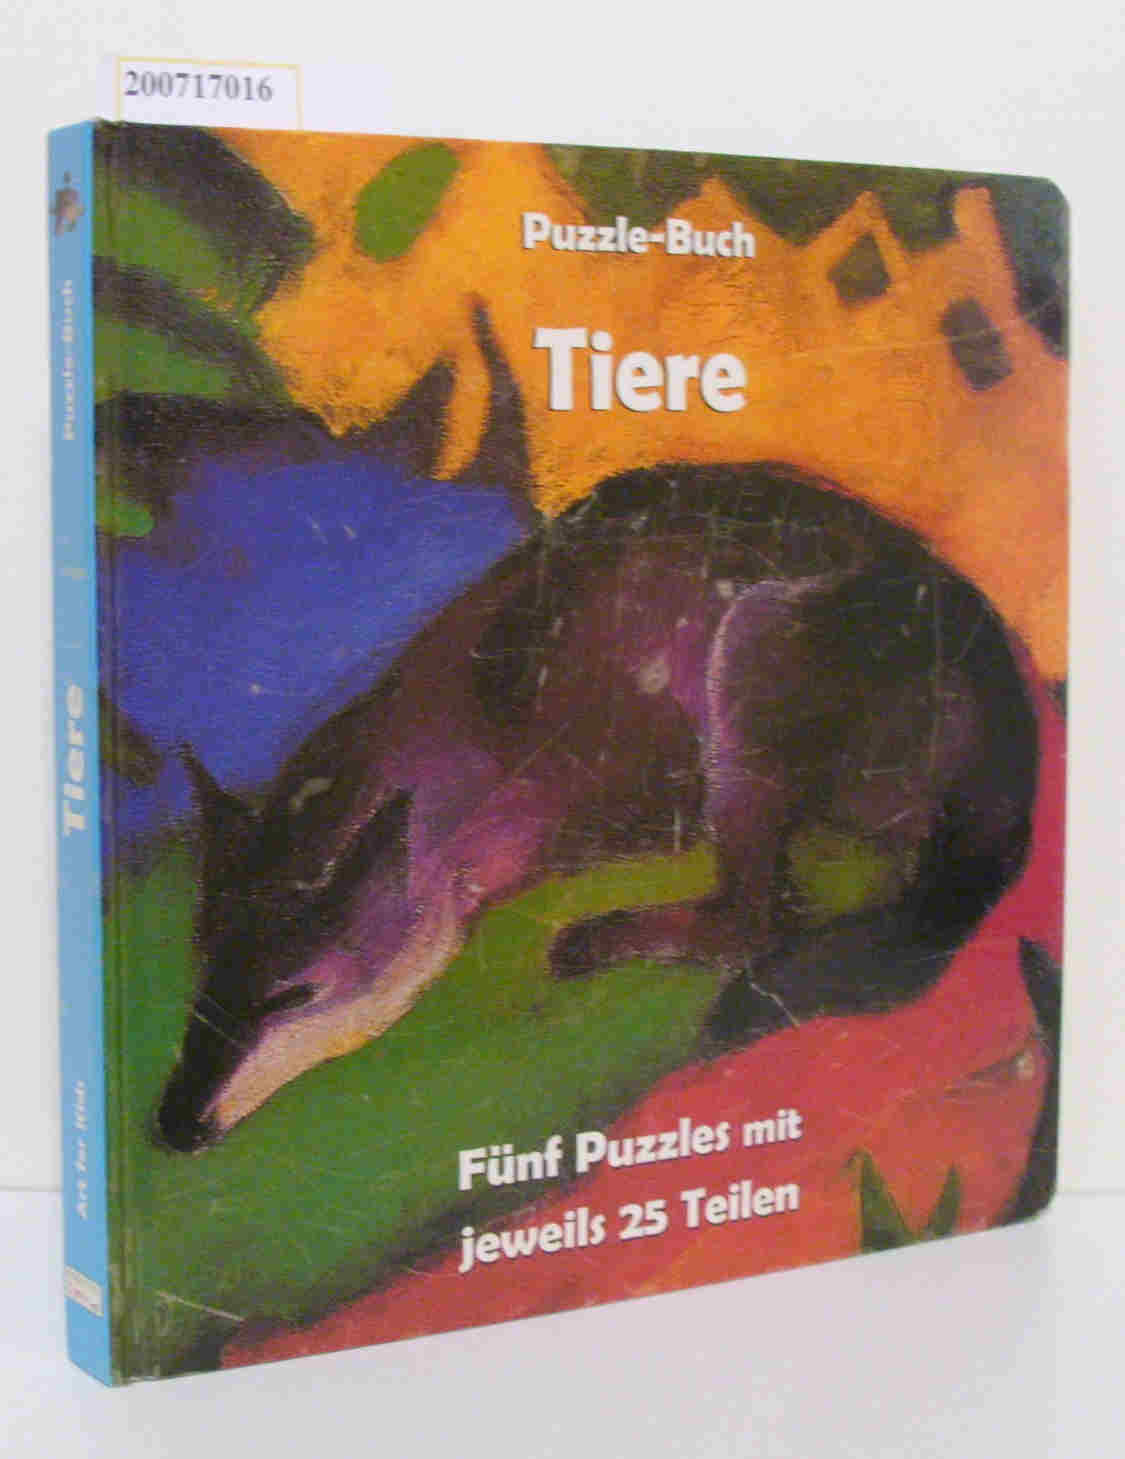 Puzzle Buch Tiere - Klaus H. Carl